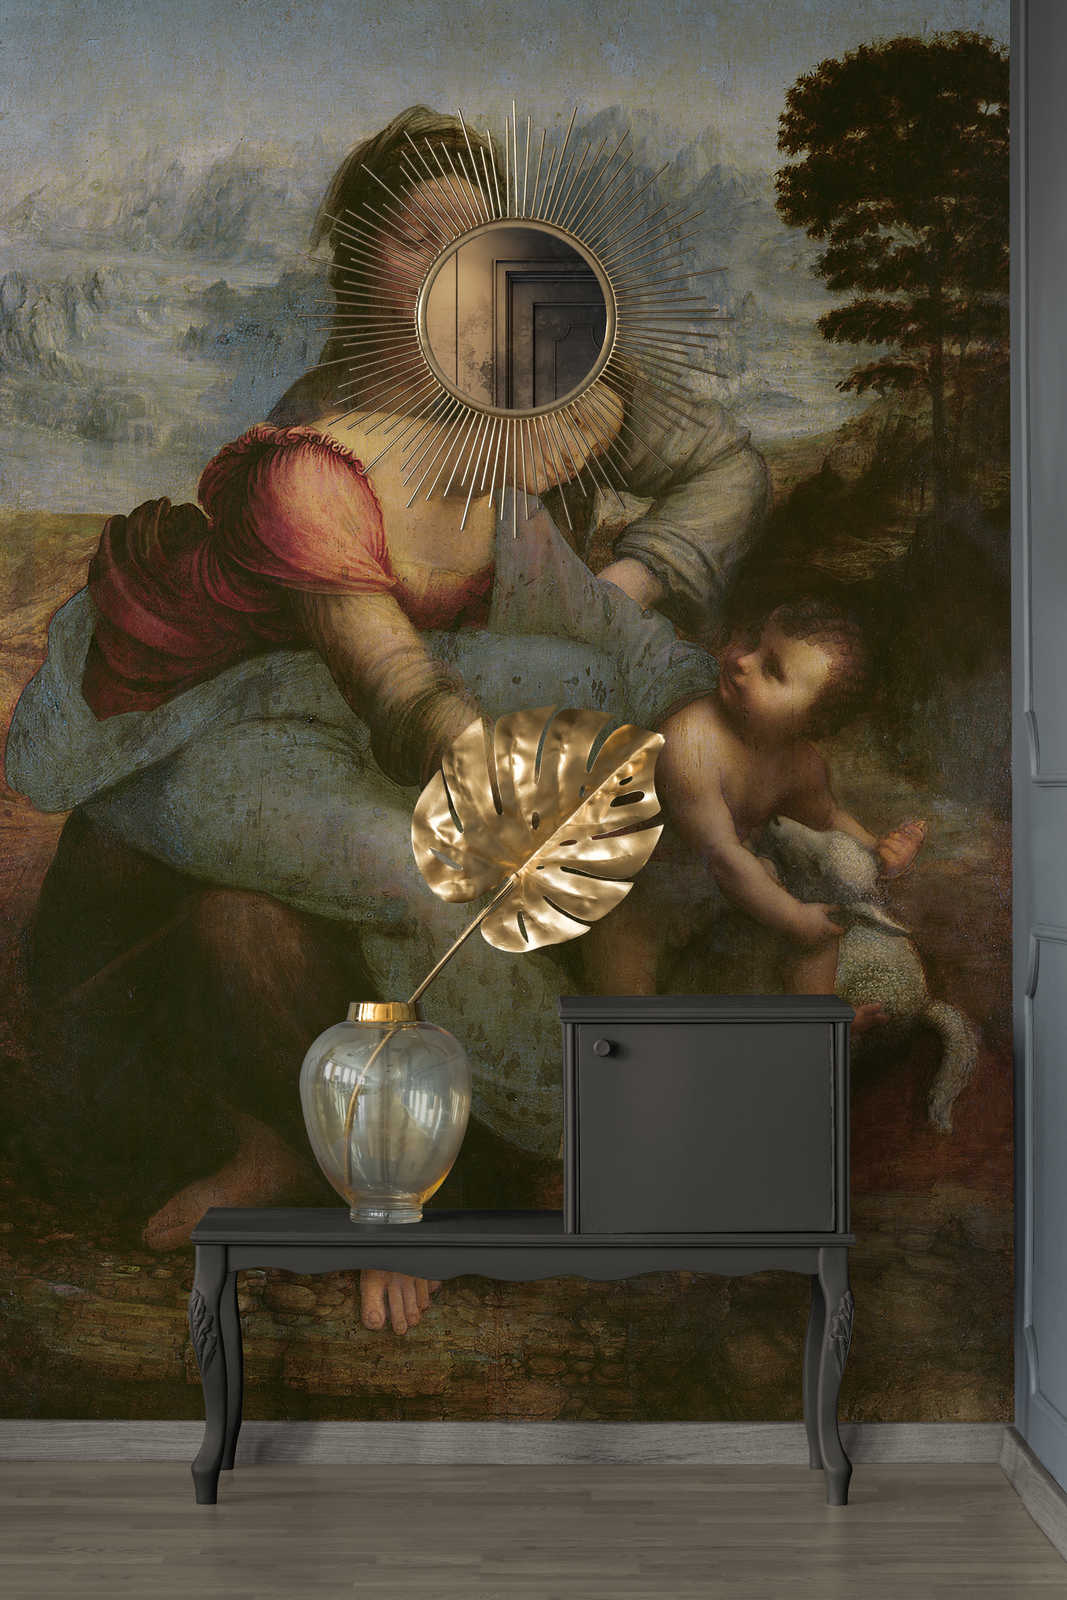             Fotobehang "Maagd en kind met St. Annaum" van Leonardo da Vinci
        